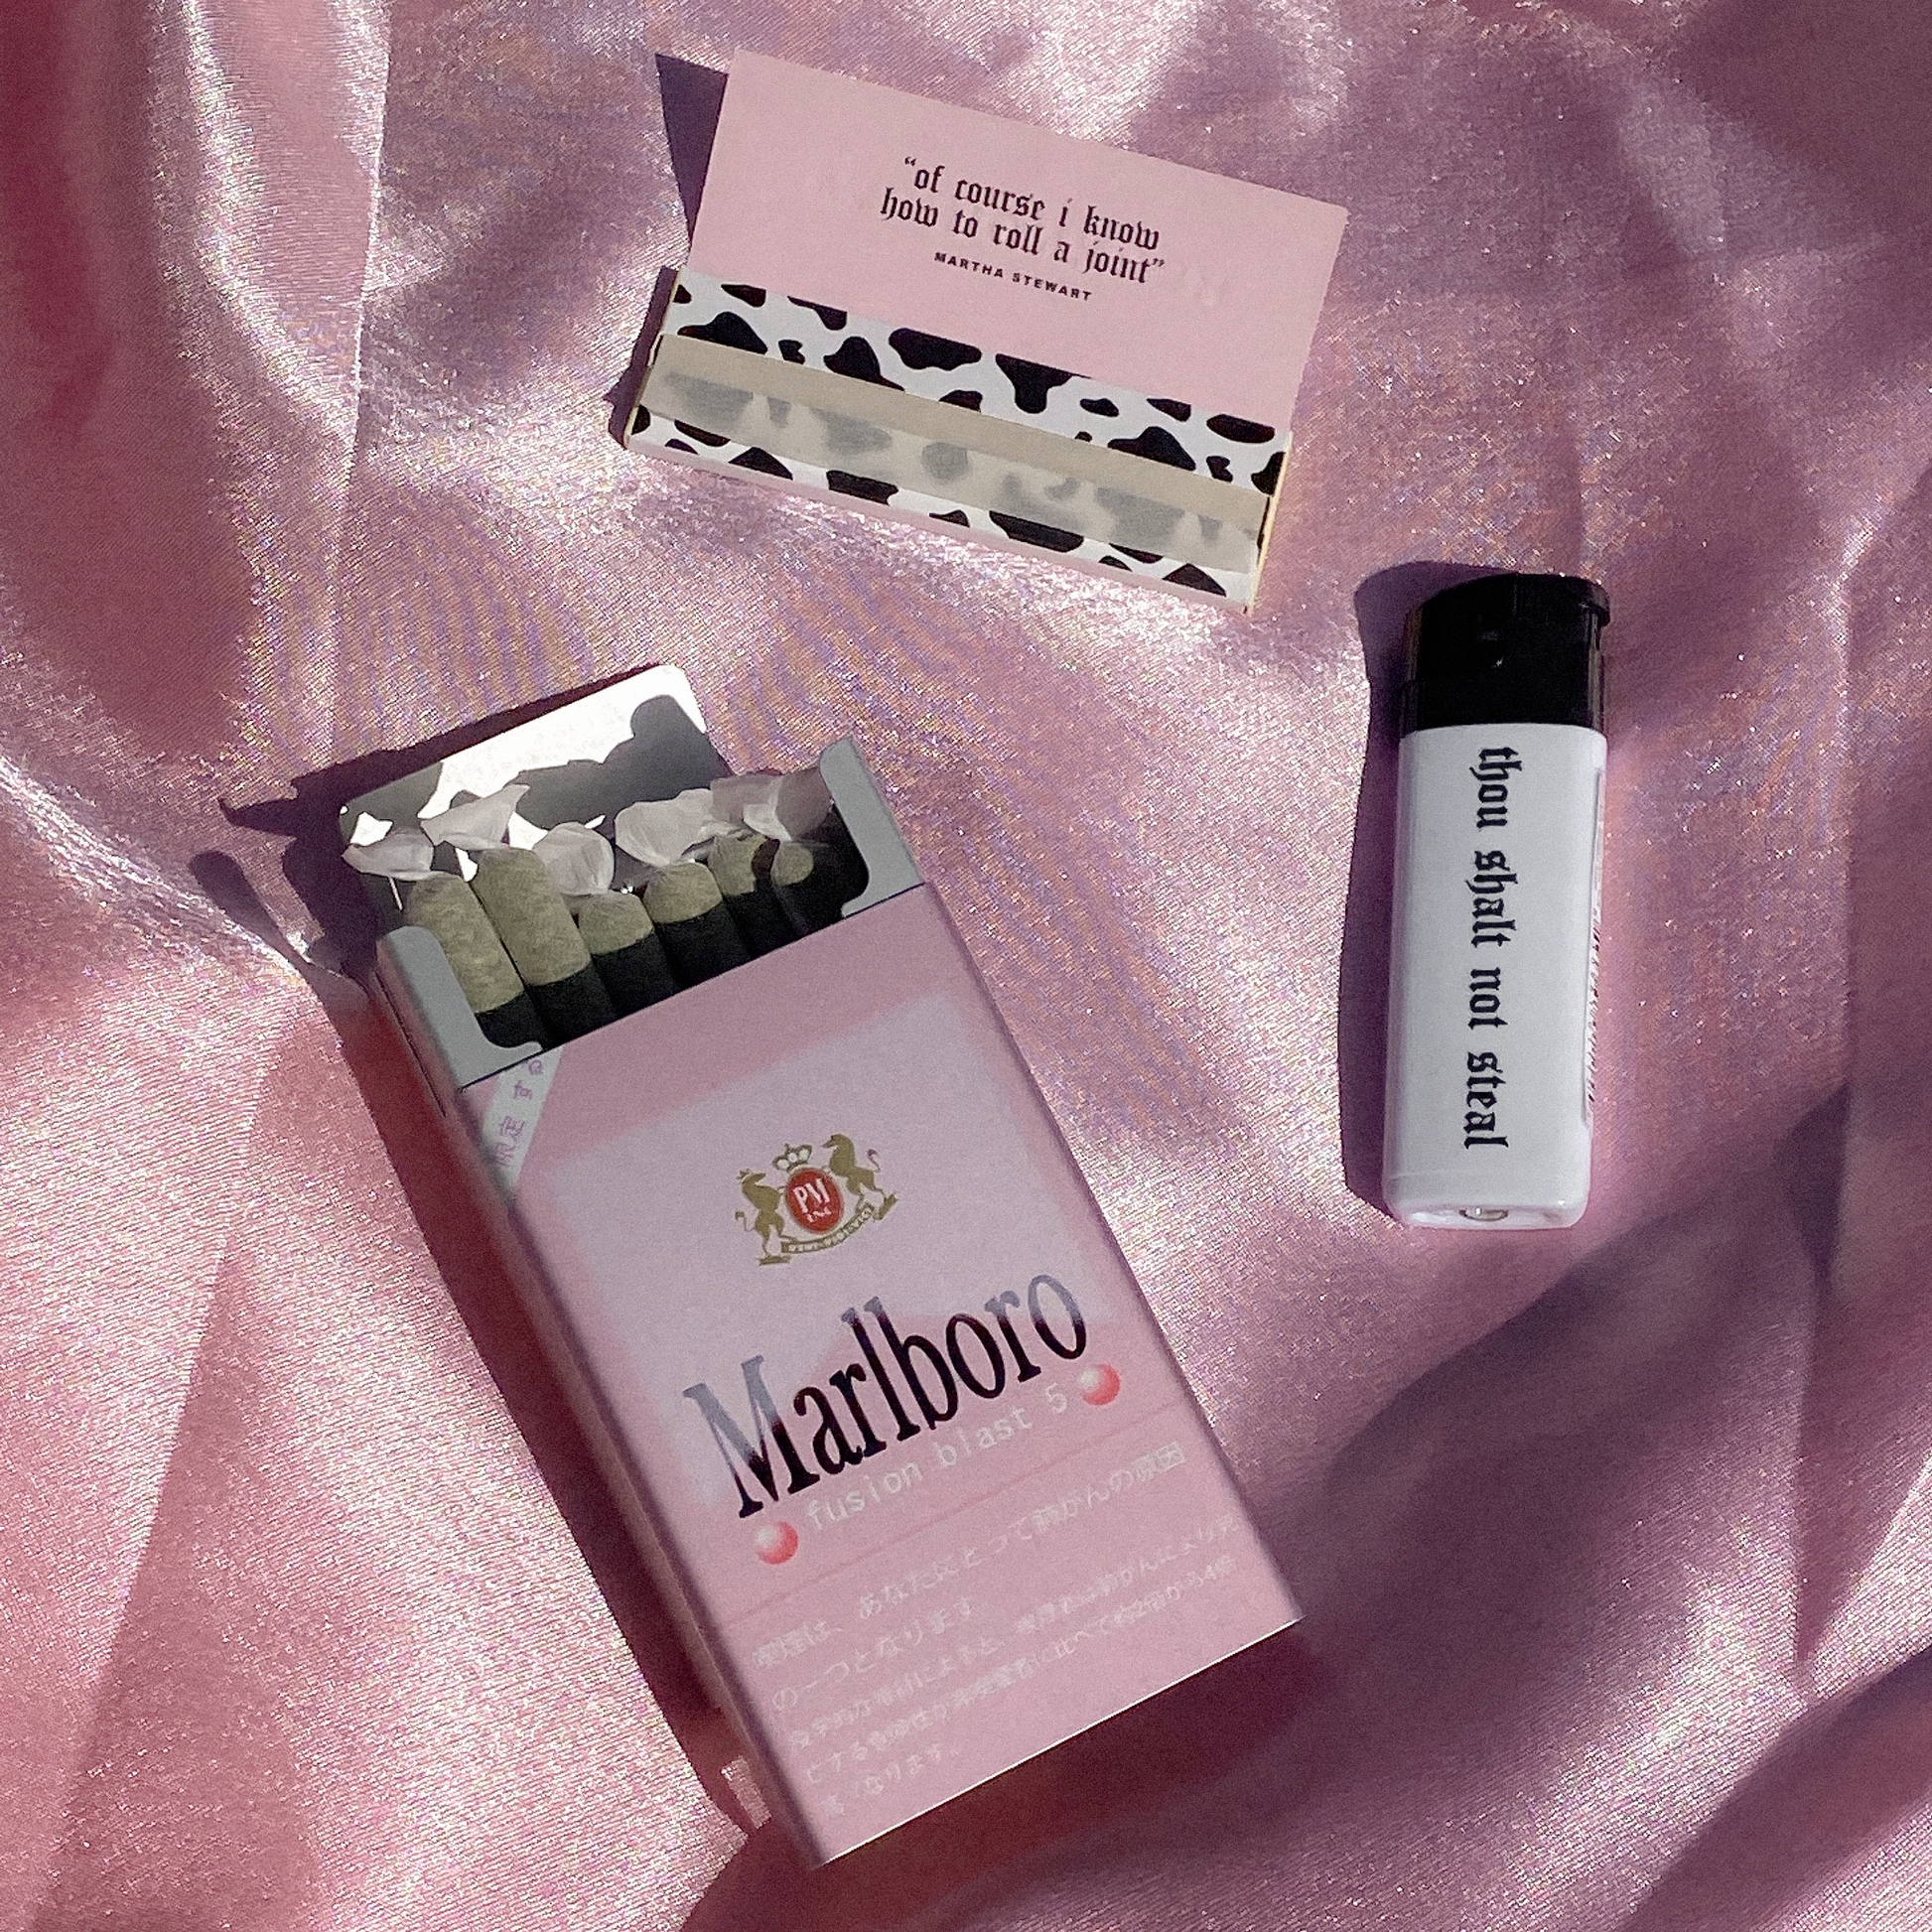 Marlboro Cigarettes – Saint Lucia's Smoke Shop